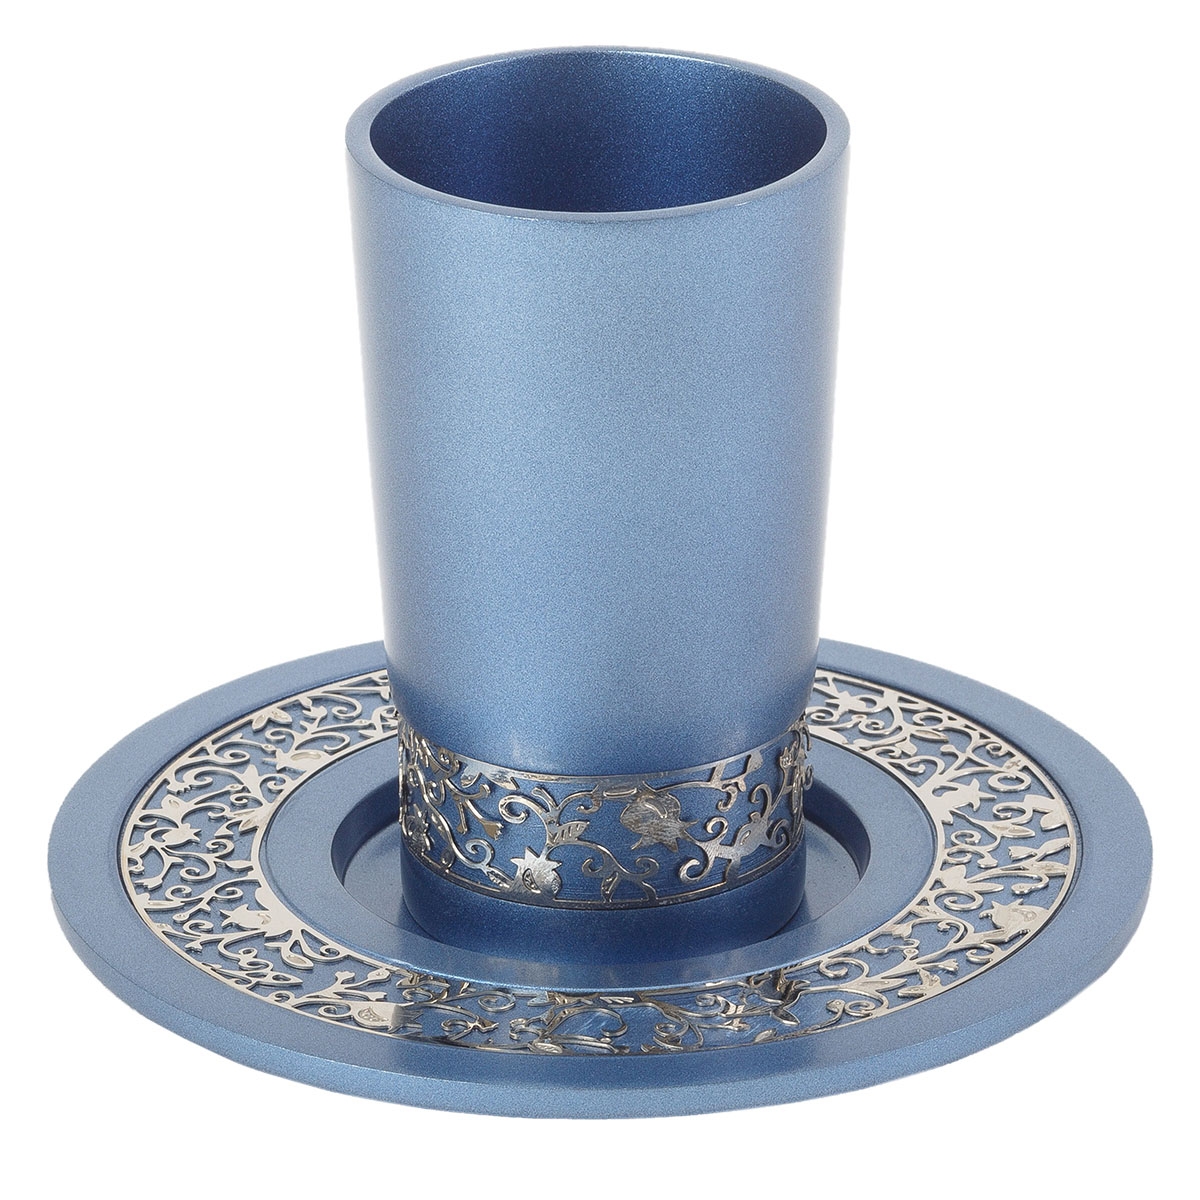 Yair Emanuel Pomegranate Anodized Aluminum Kiddush Cup - Blue  - 1